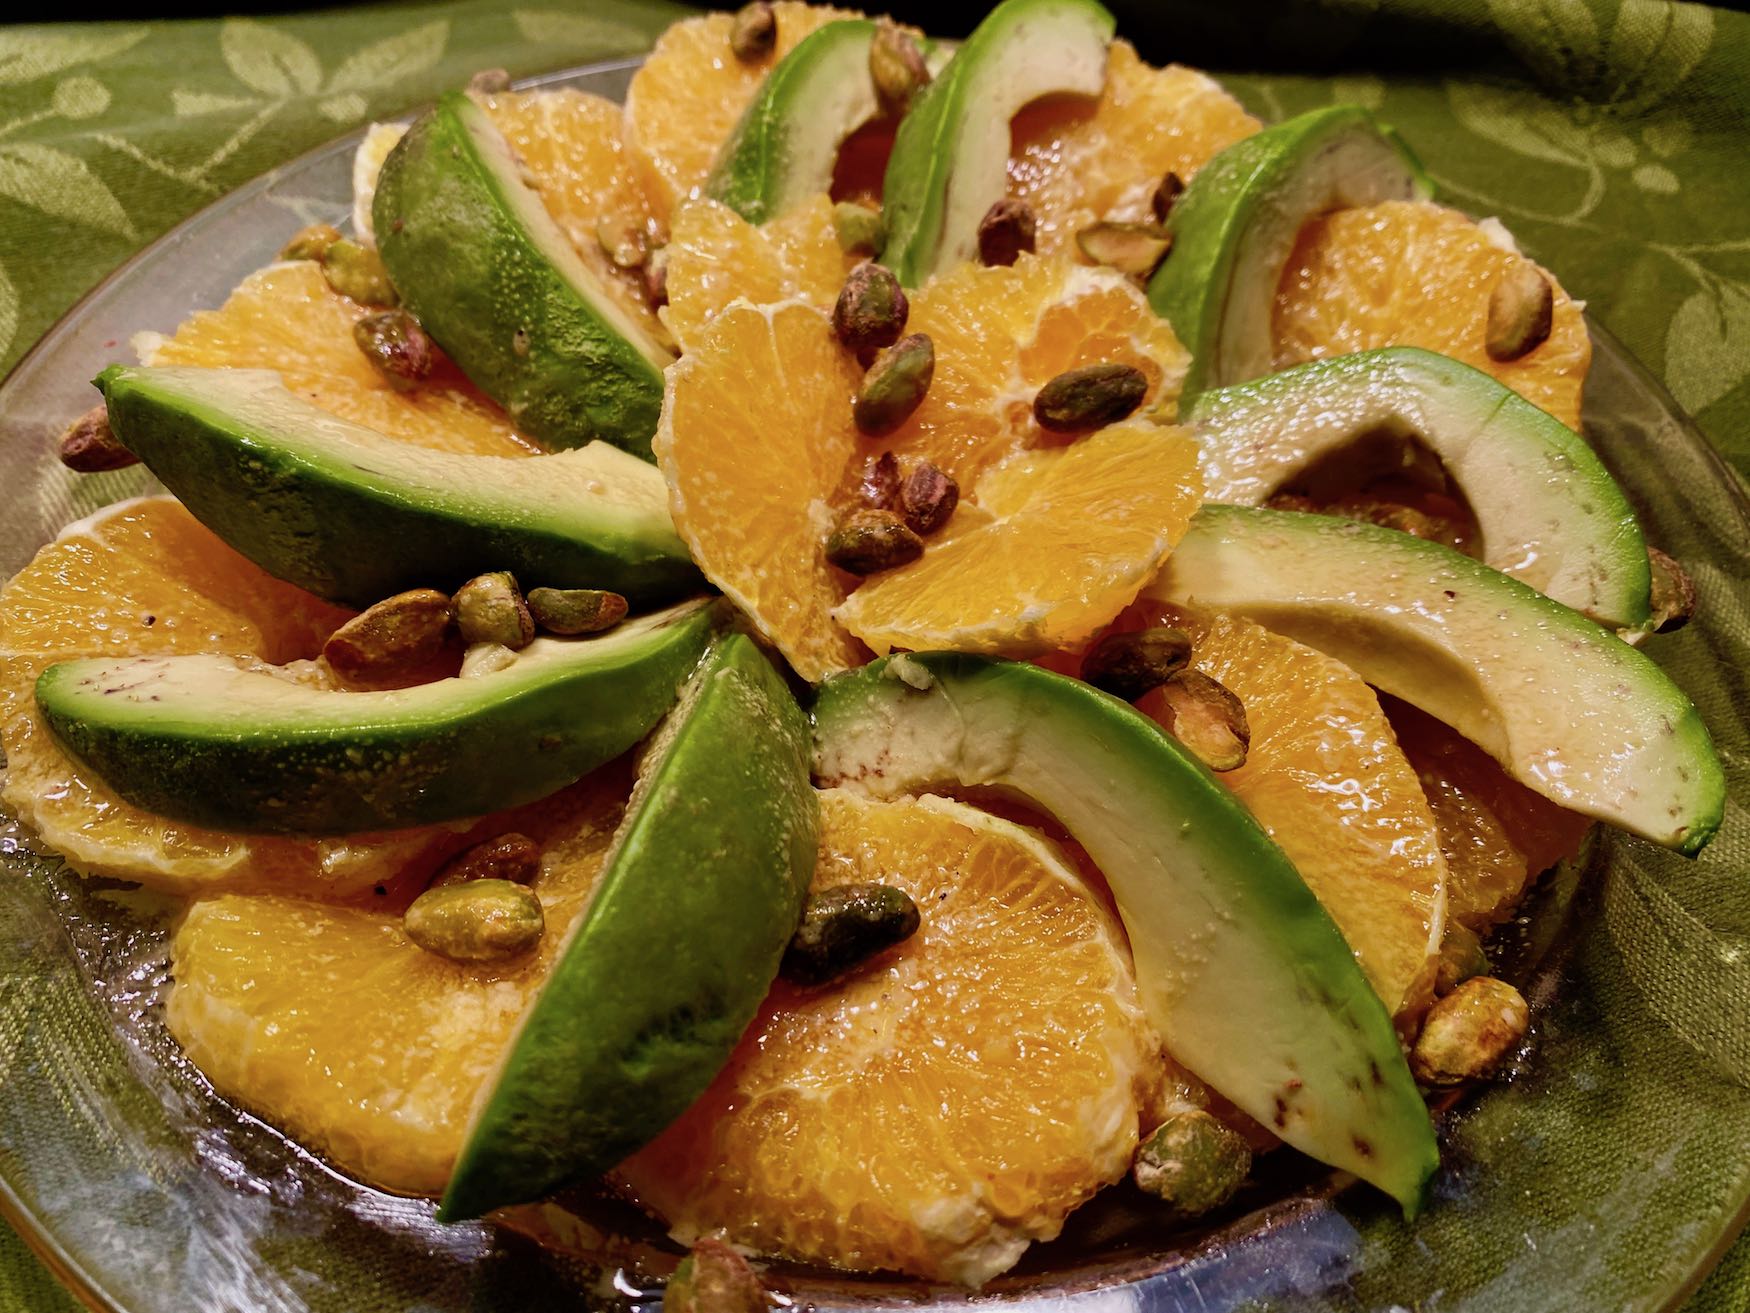 Orange Avocado Salad with Pistachios